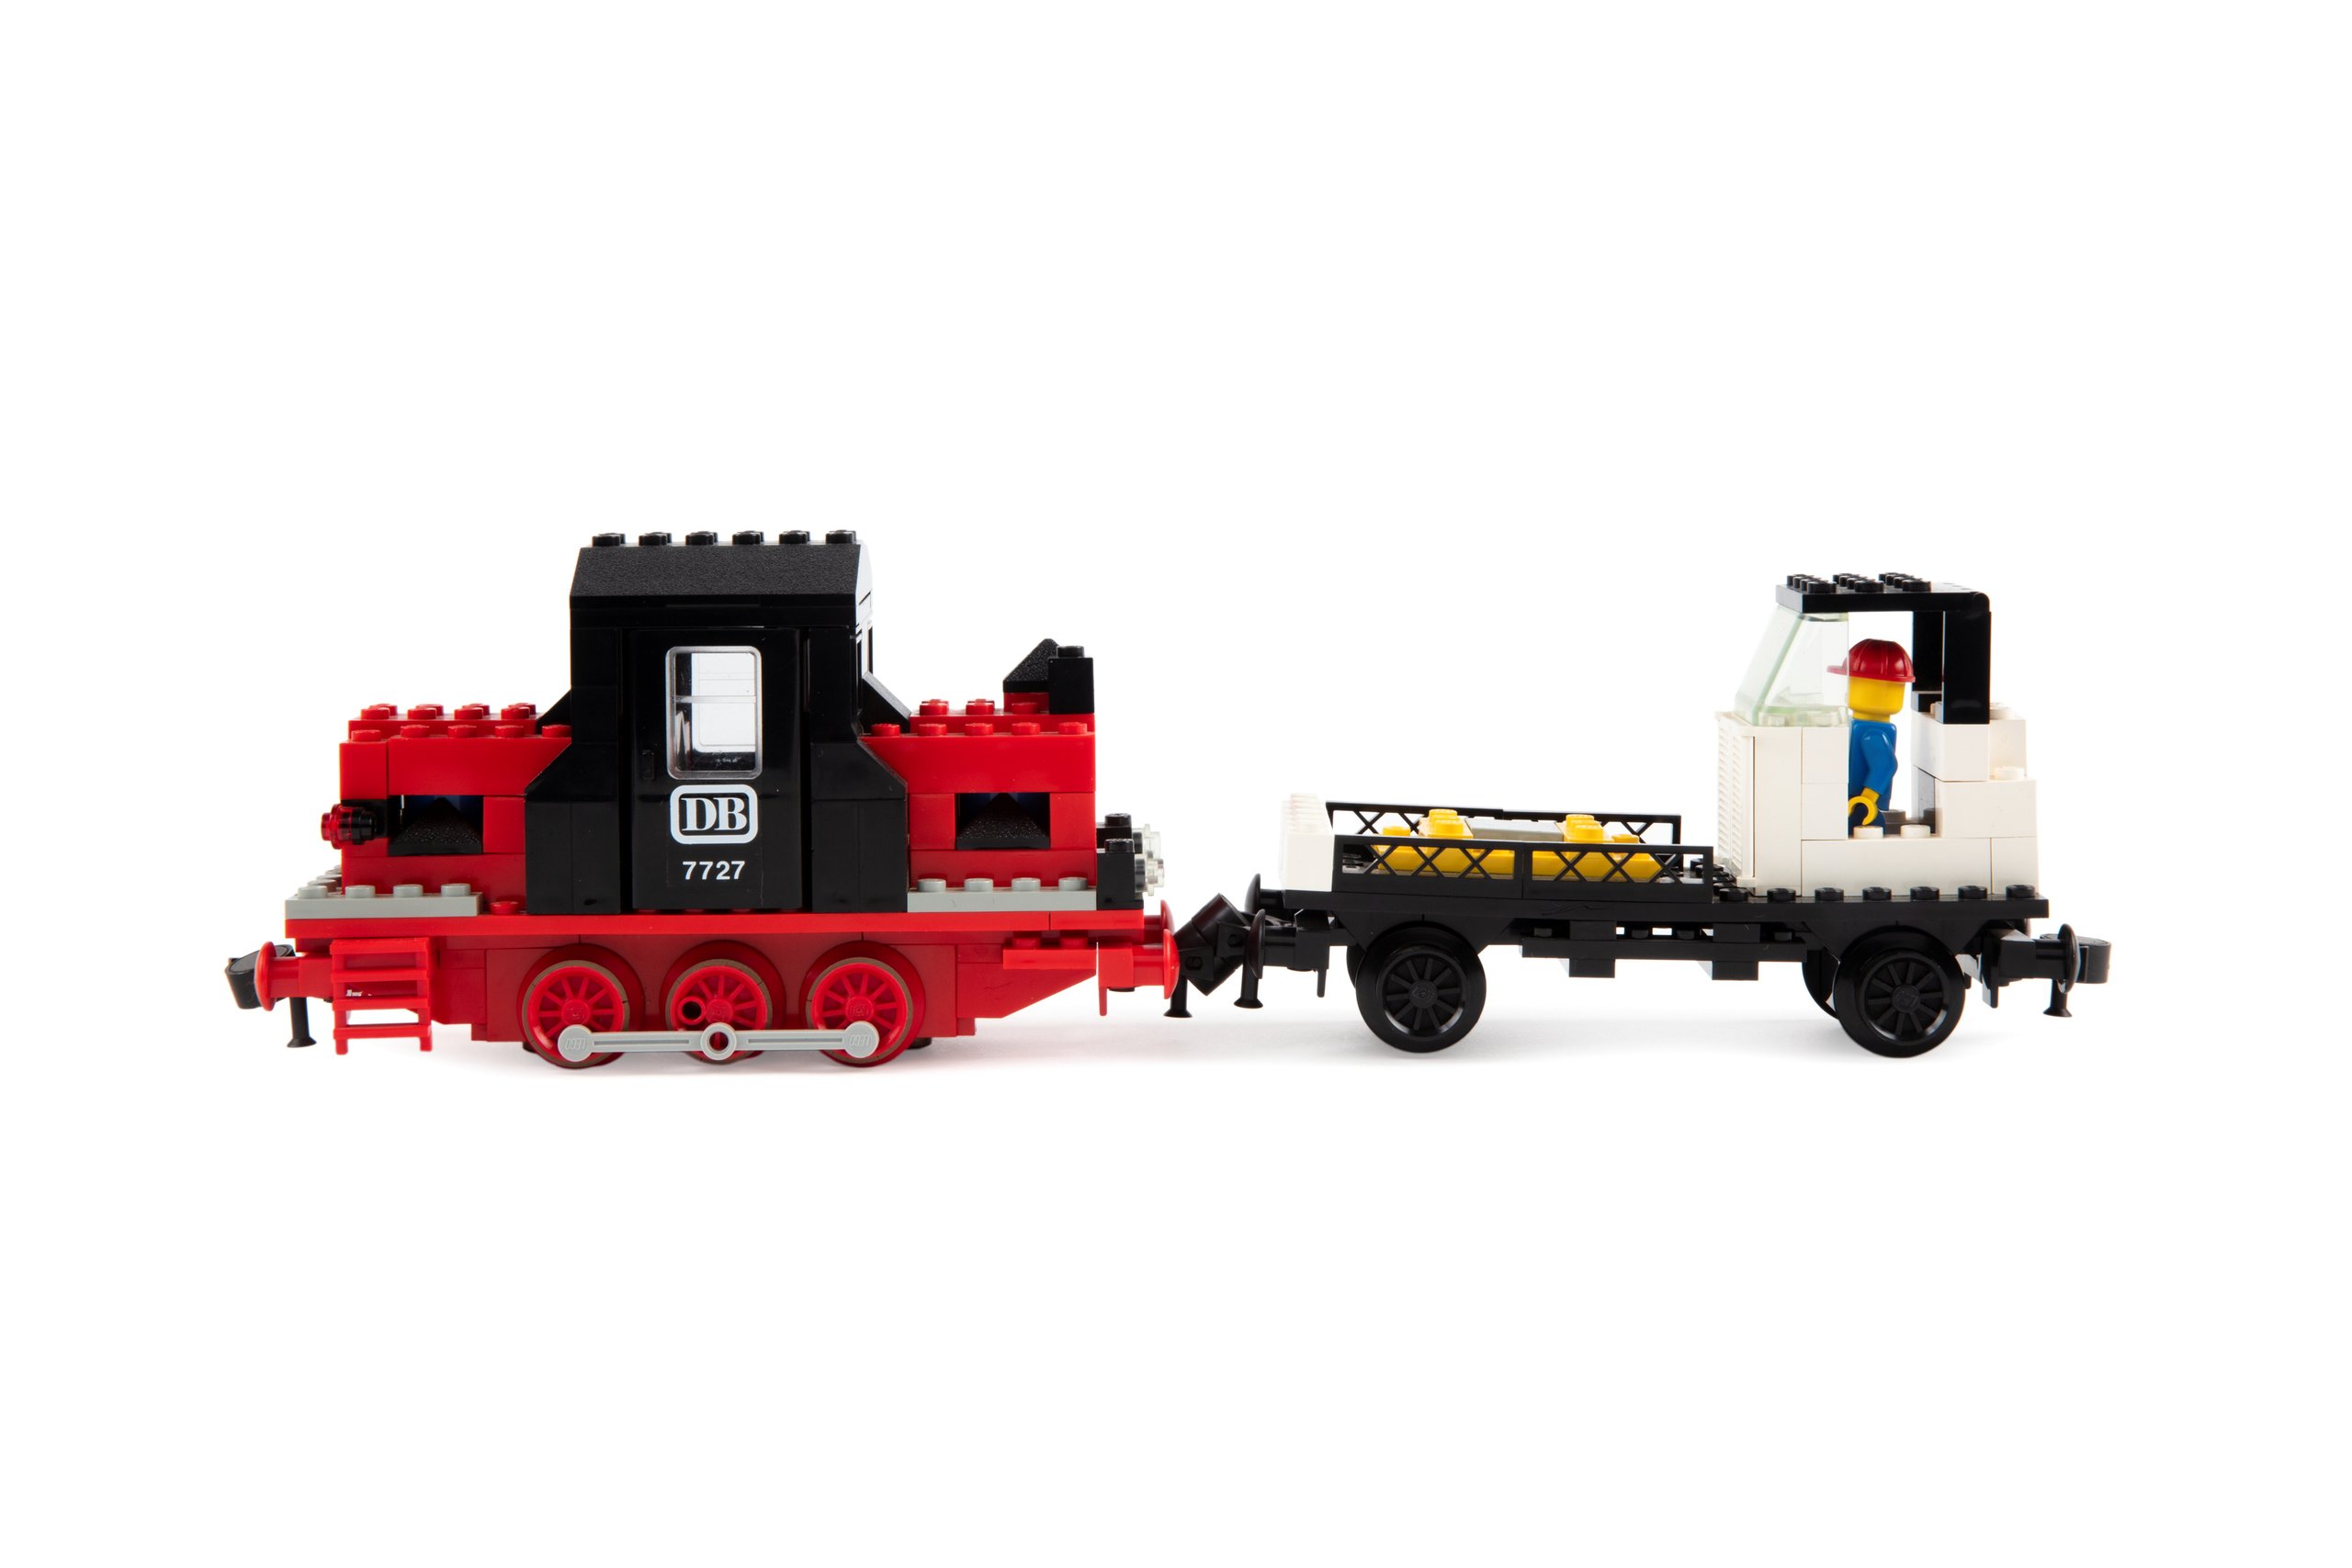 LEGO train set from Denmark